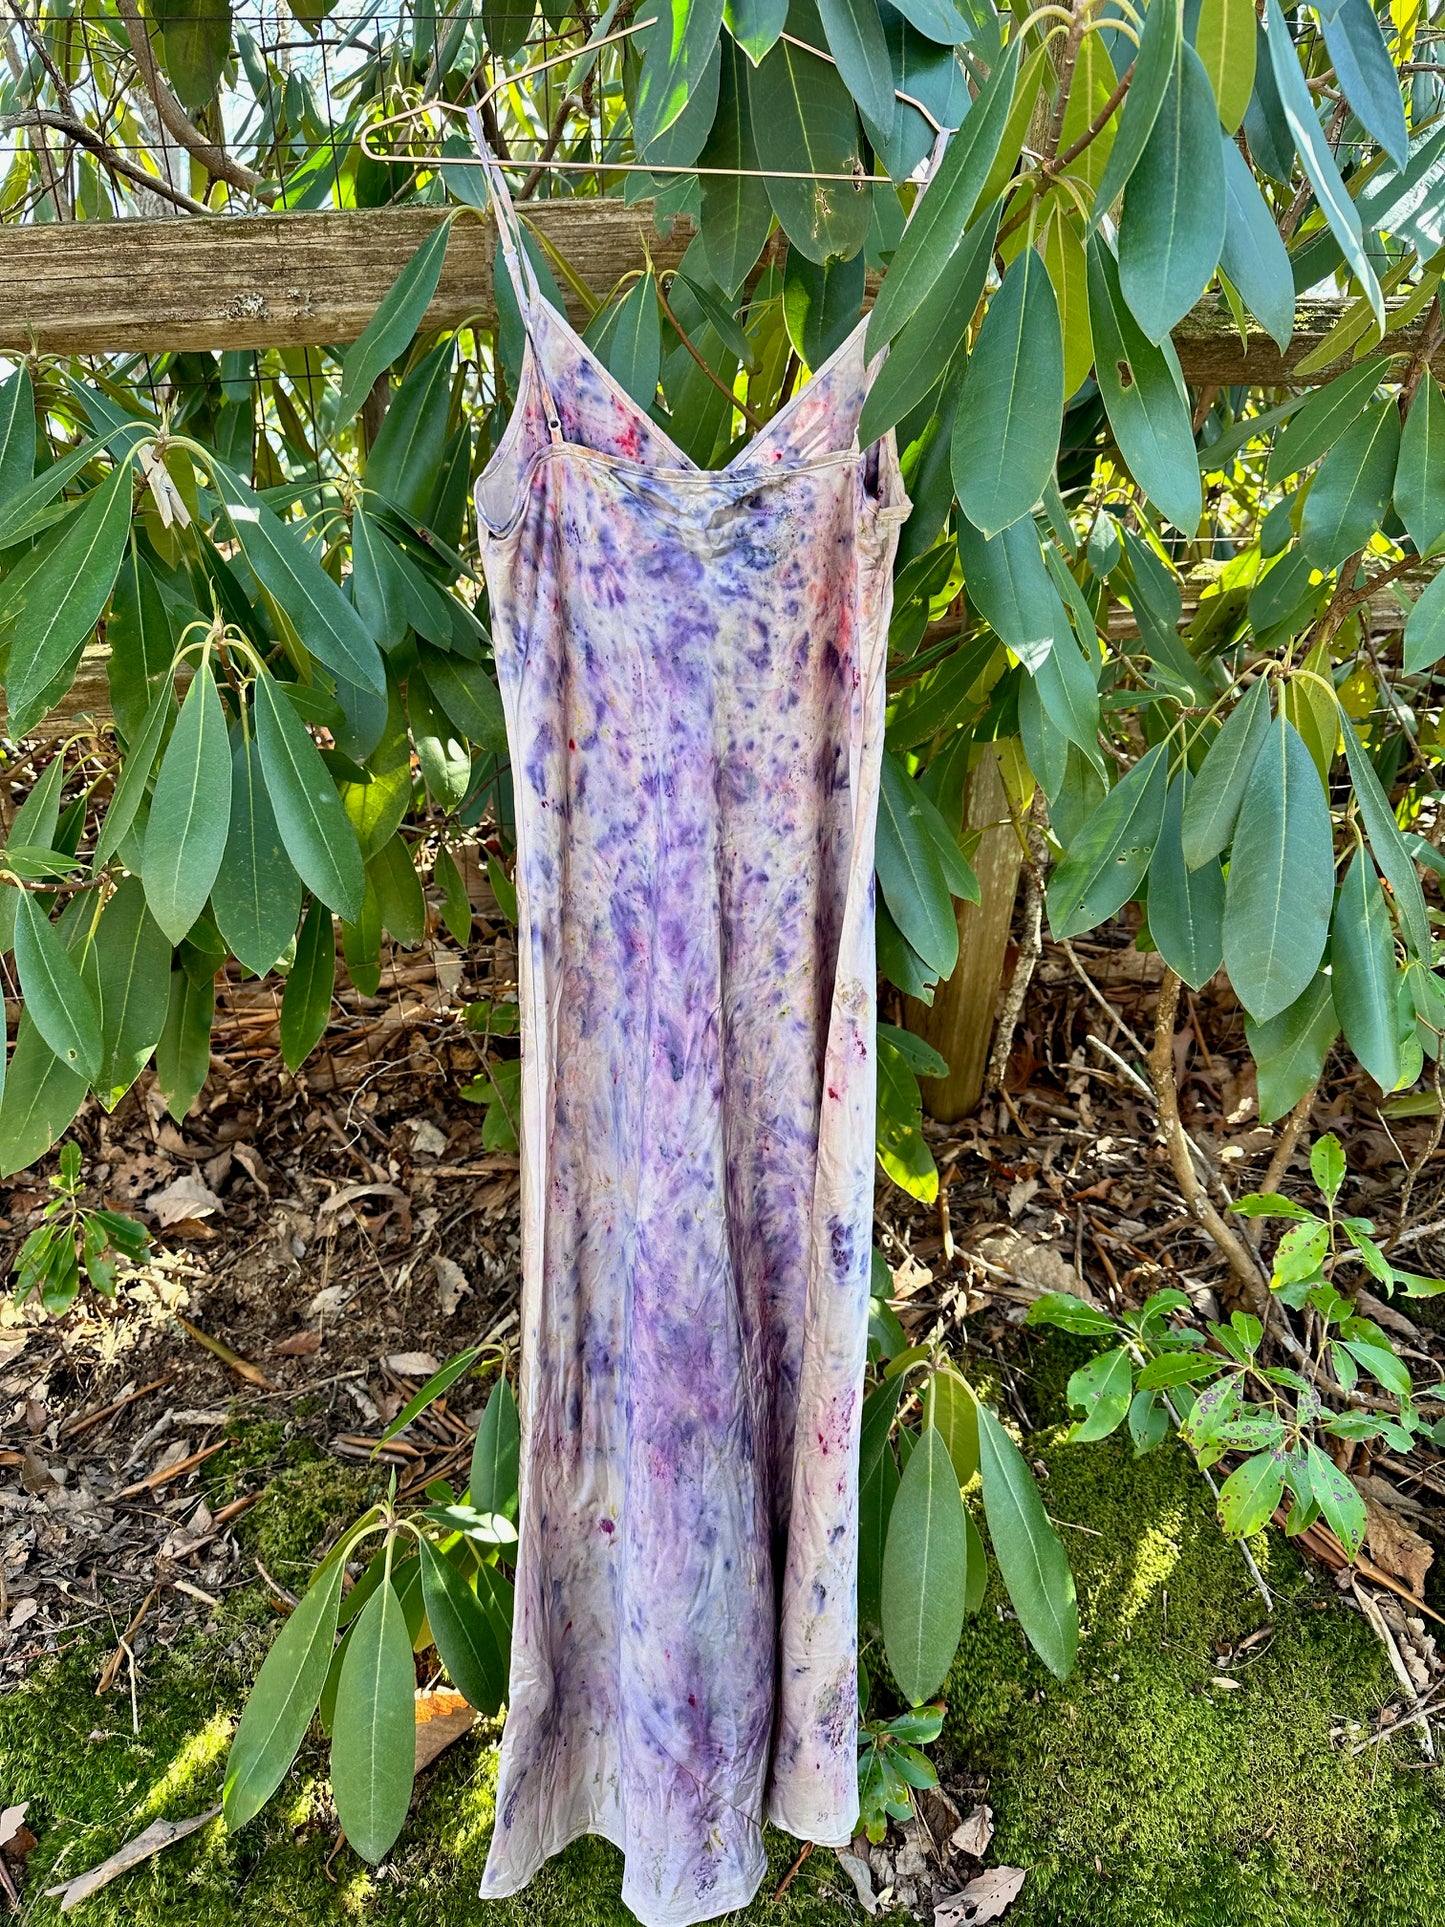 Silk Slip Dress - Of the Flowers & Stars